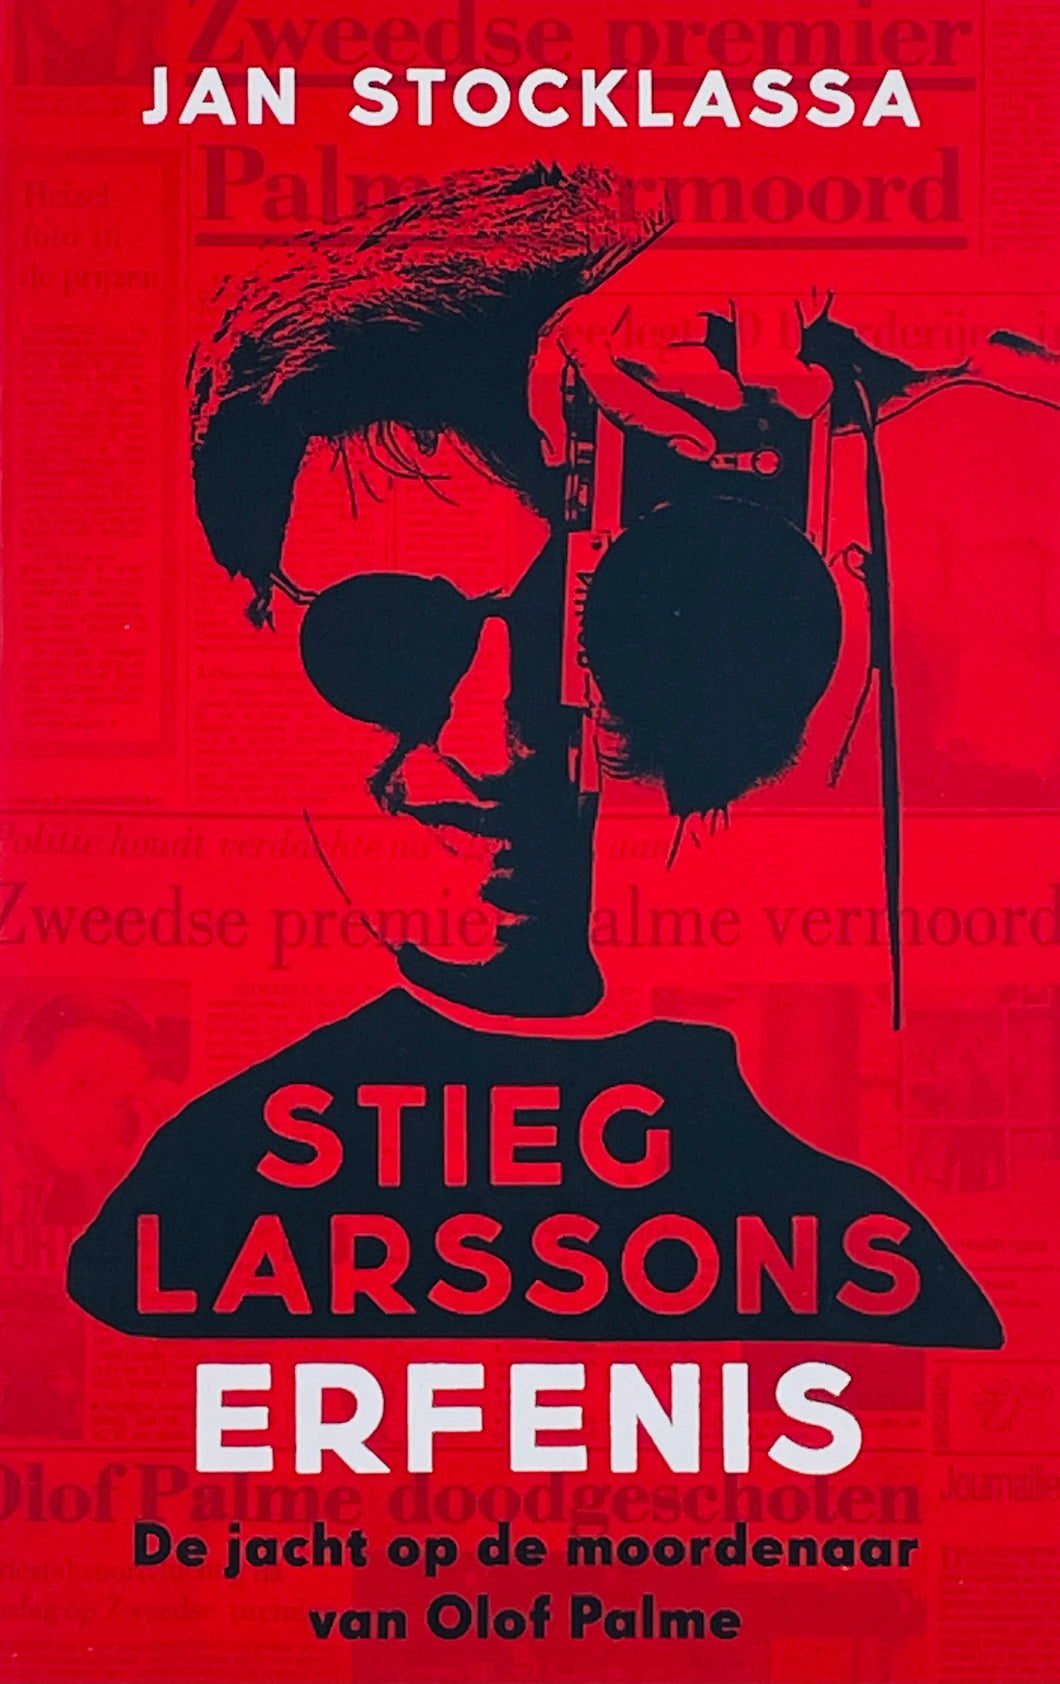 Stocklassa Jan - Stieg Larssons erfenis